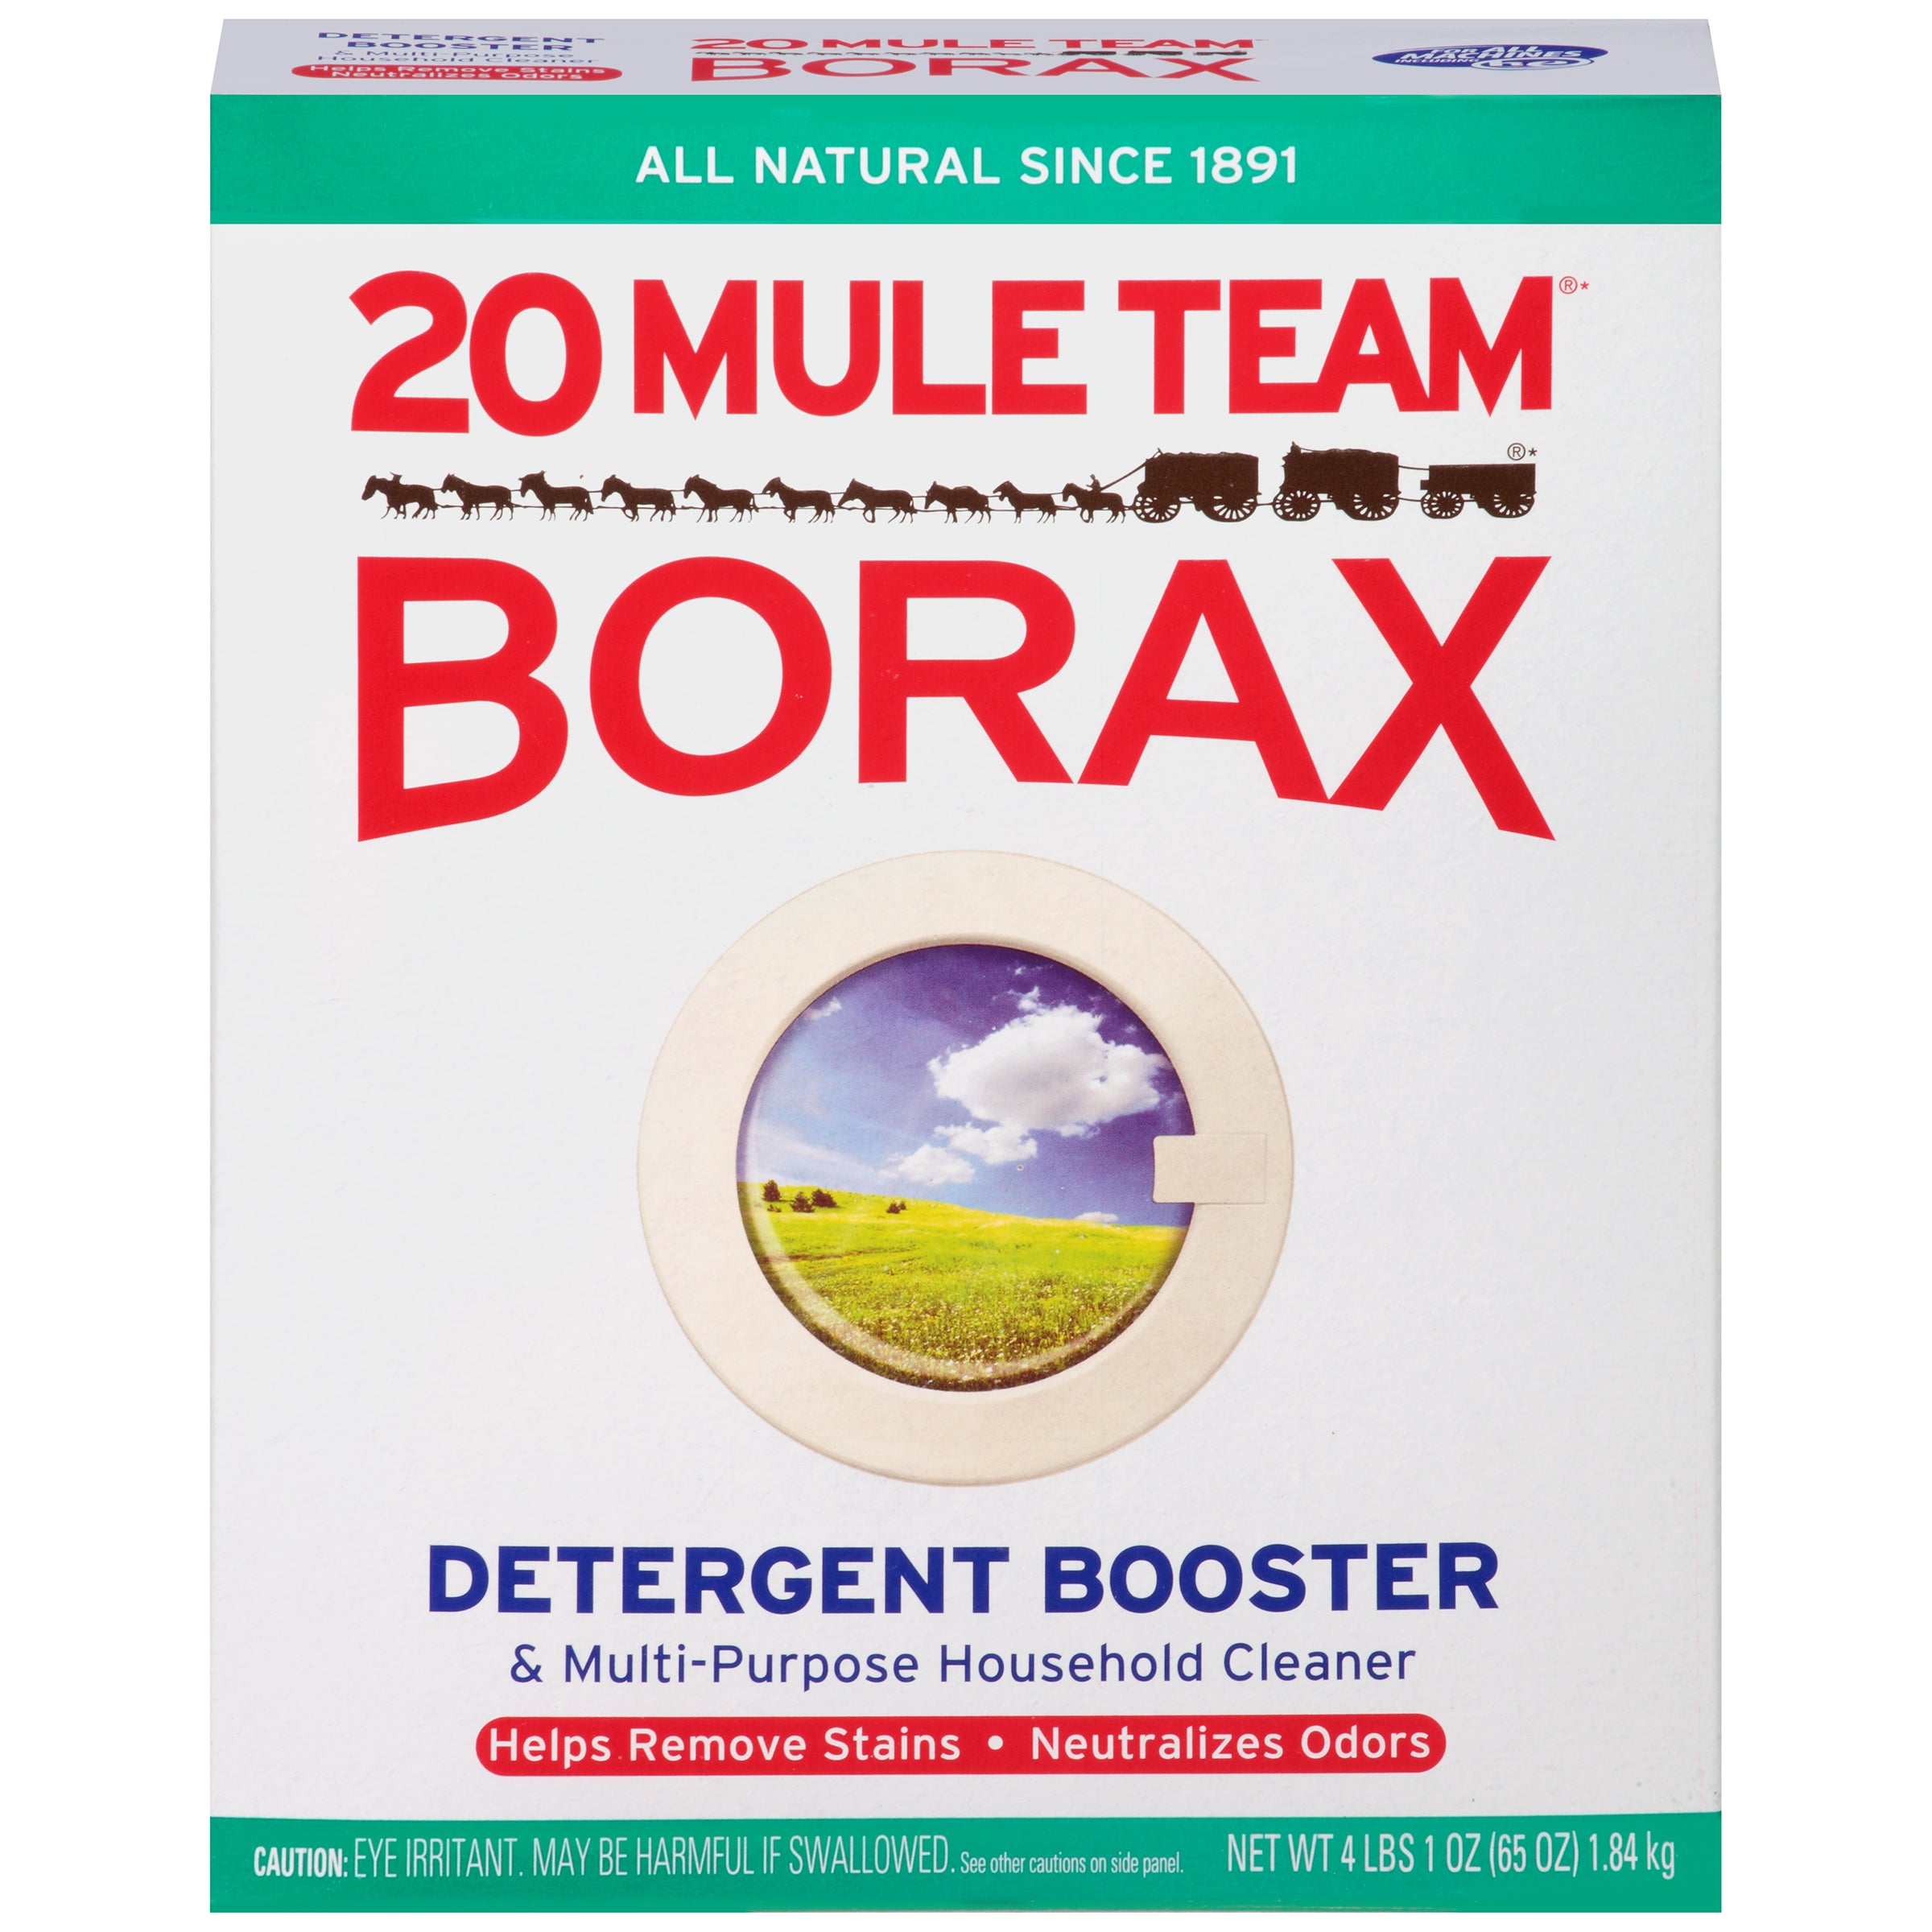 20 MULE TEAM BORAX DETERGENT BOOSTER 4 LBS